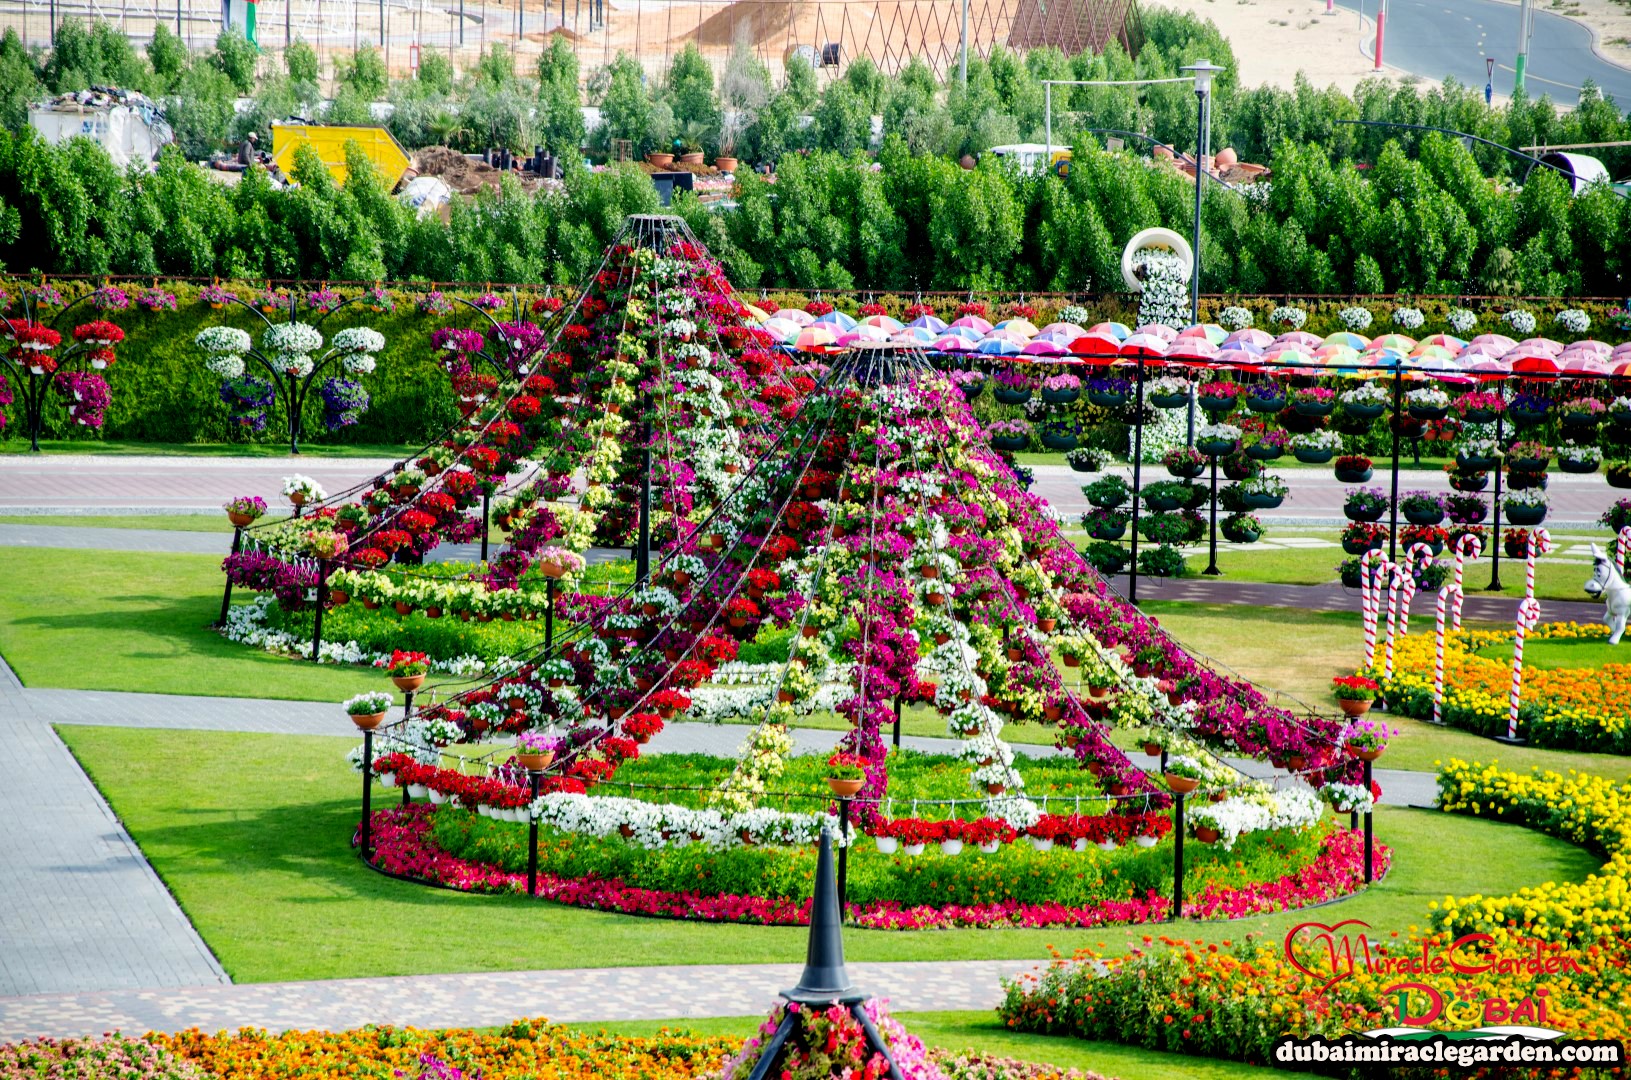 ОАЭ.Райский парк цветов.Miracle Garden-.